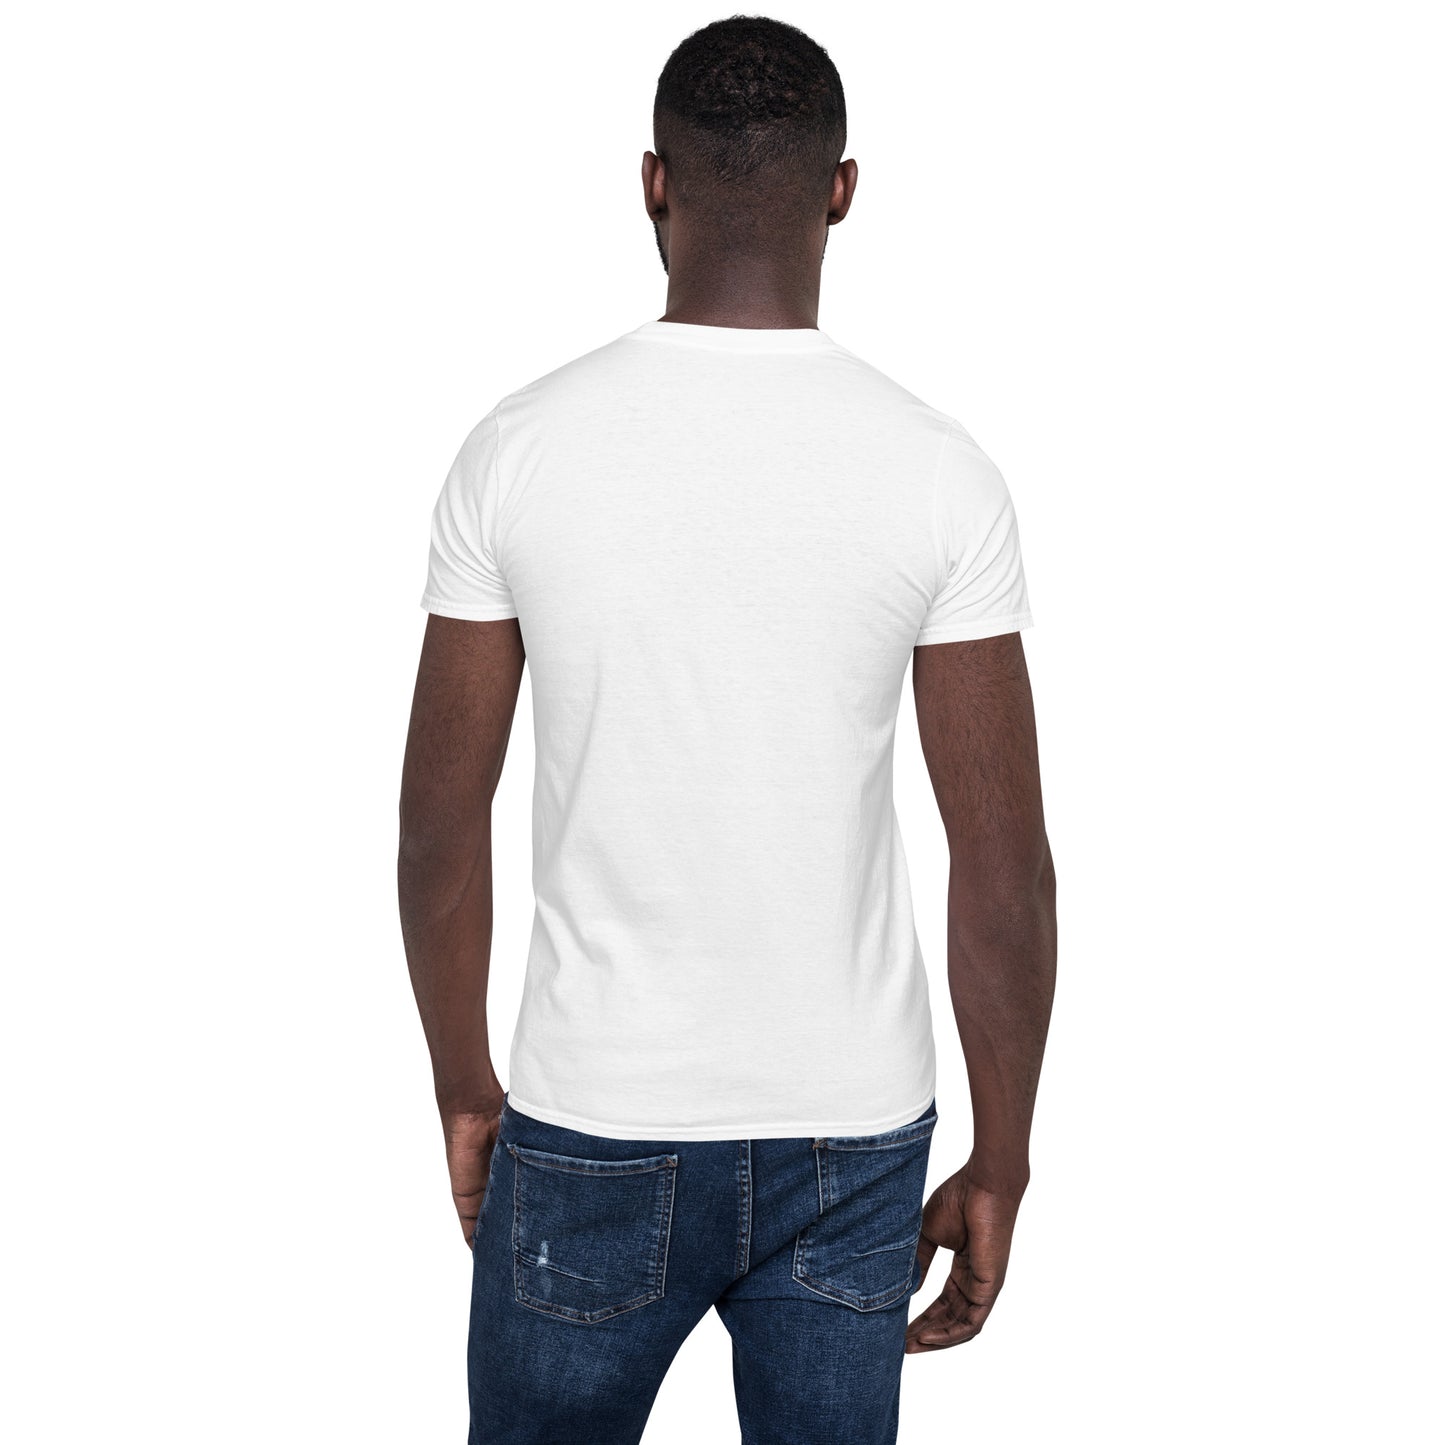 ELDR Unisex T-Shirt